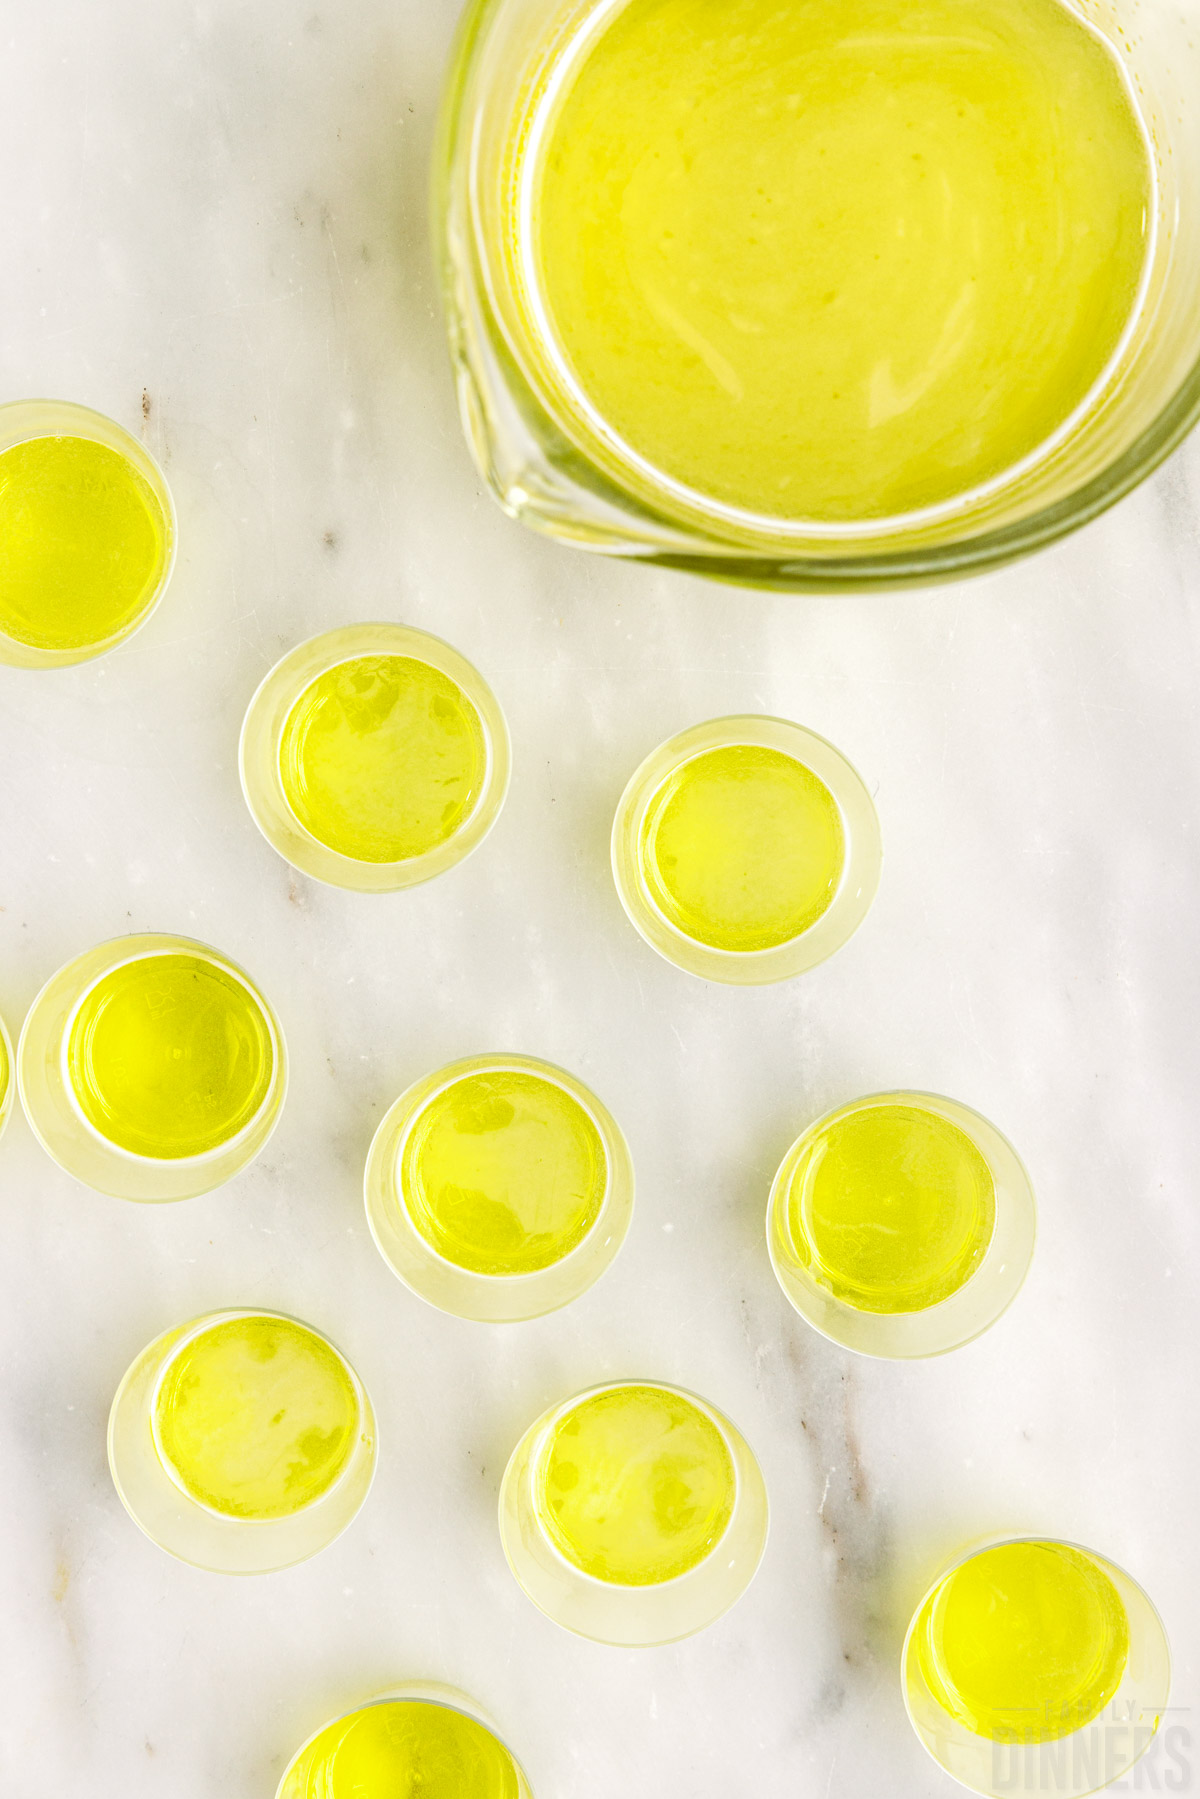 yellow jello layer in shot glasses